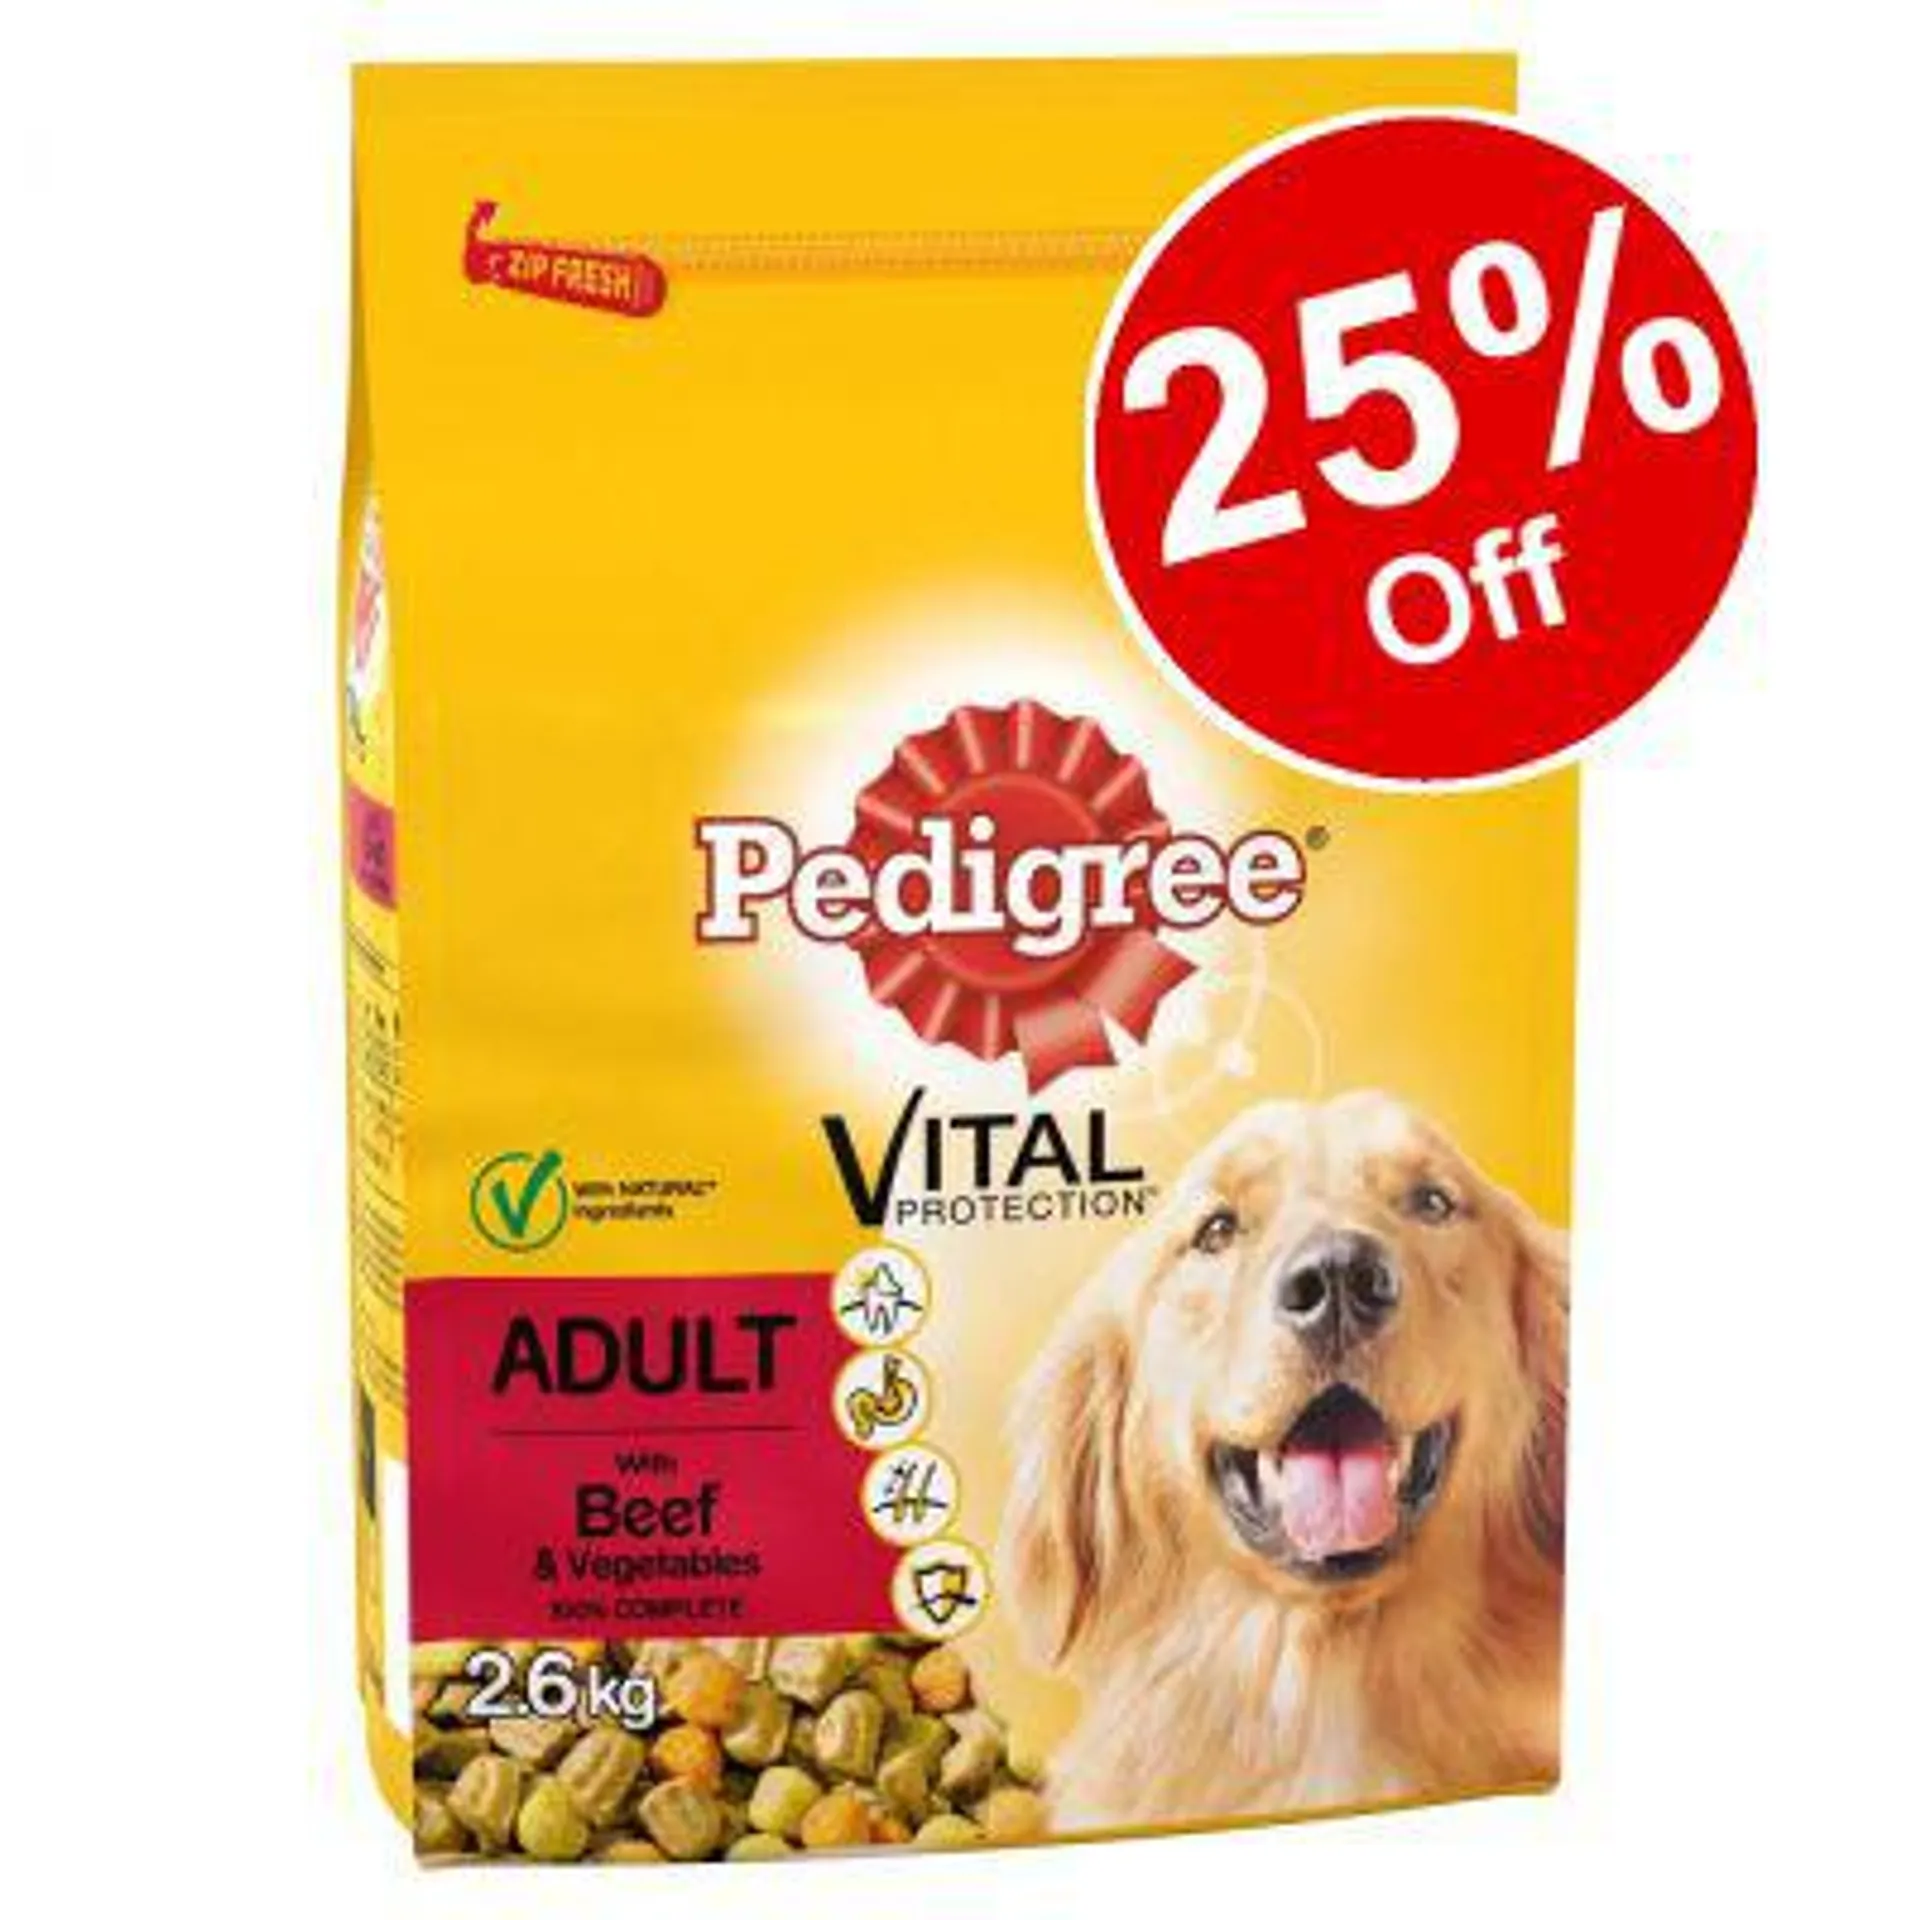 Pedigree Adult Dry Dog Food - 25% Off!*